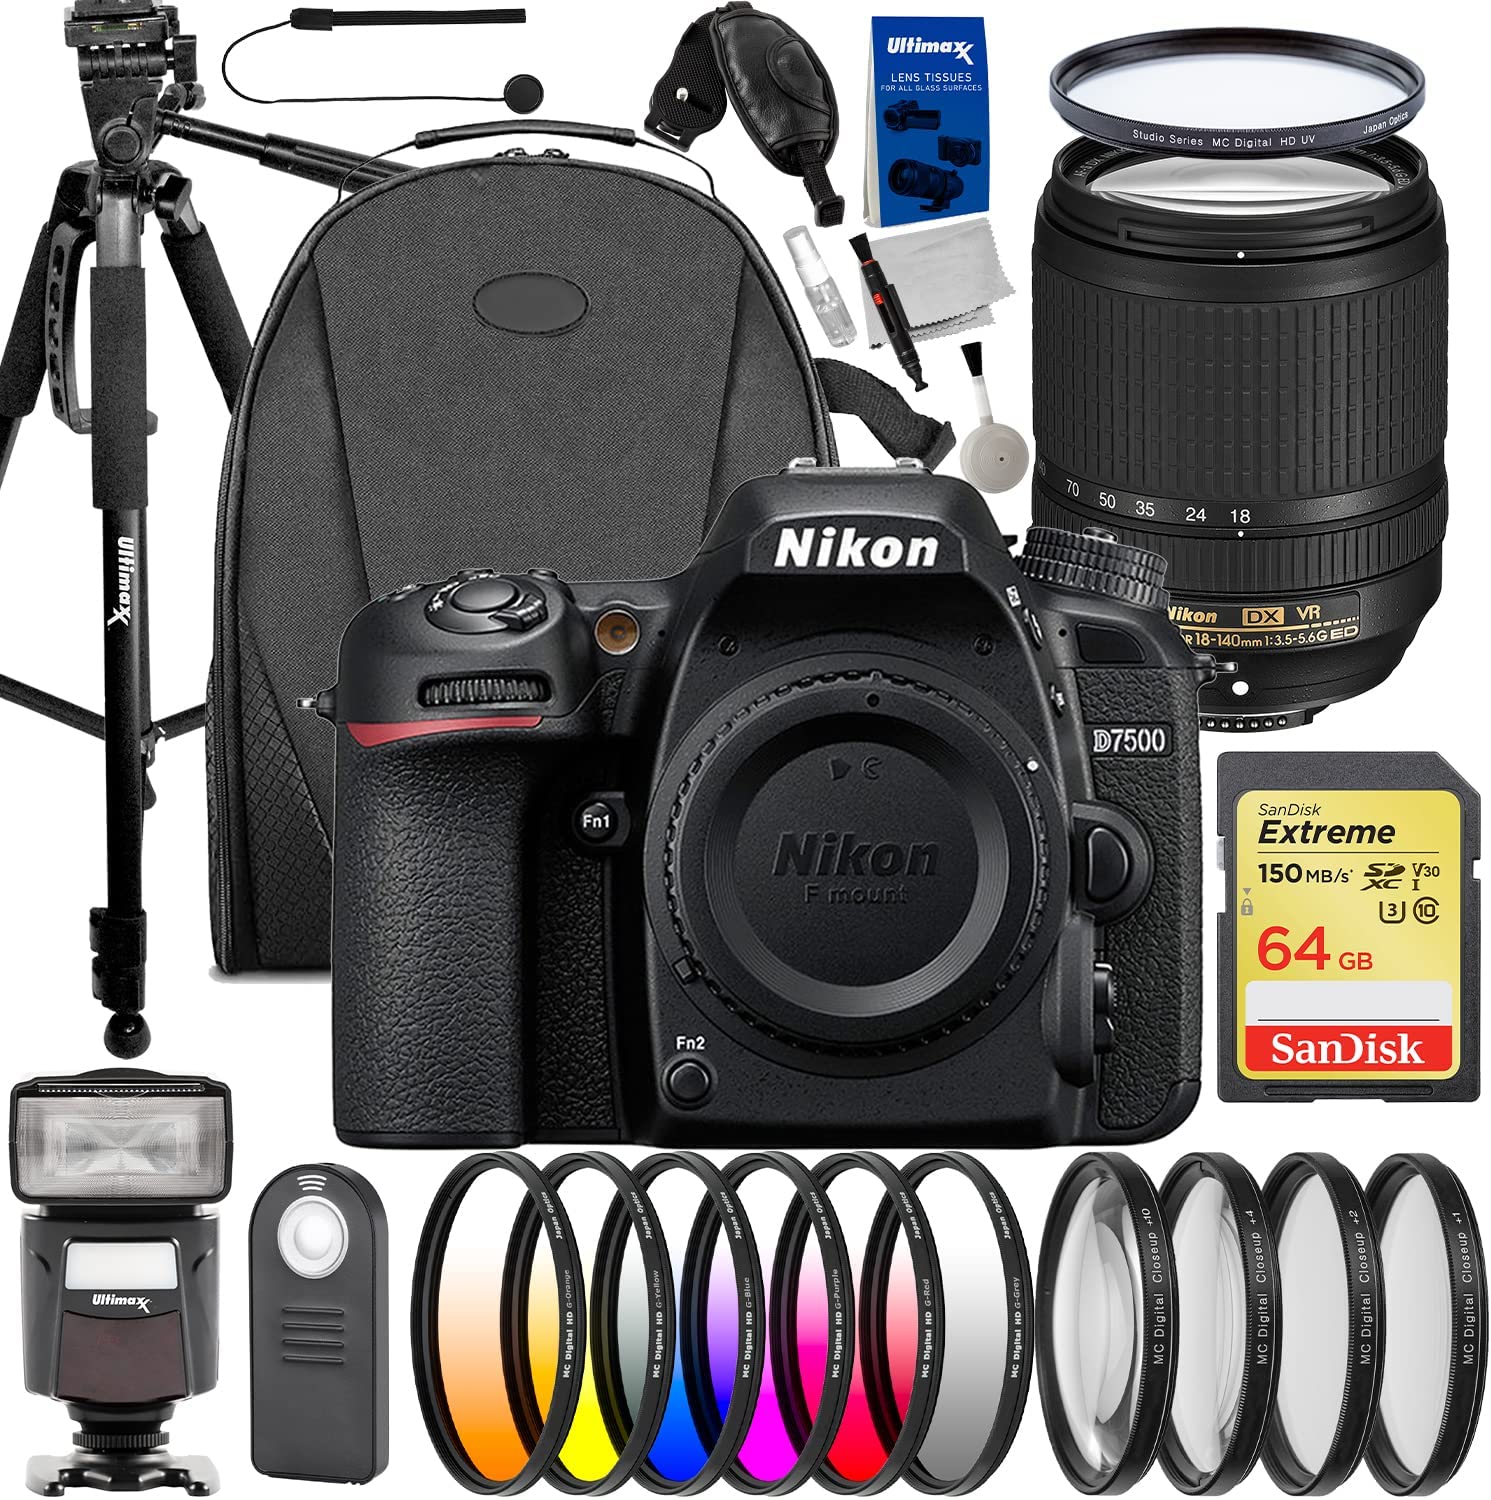 Nikon D7500 DSLR Camera with 18-140mm Lens + SanDisk Extreme 64GB SDXC, Lightweight 60â? Tripod, Universal Speedlite with LED Video Light, Infrared Universal Shutter Remote & Much More (32pc Bundle)